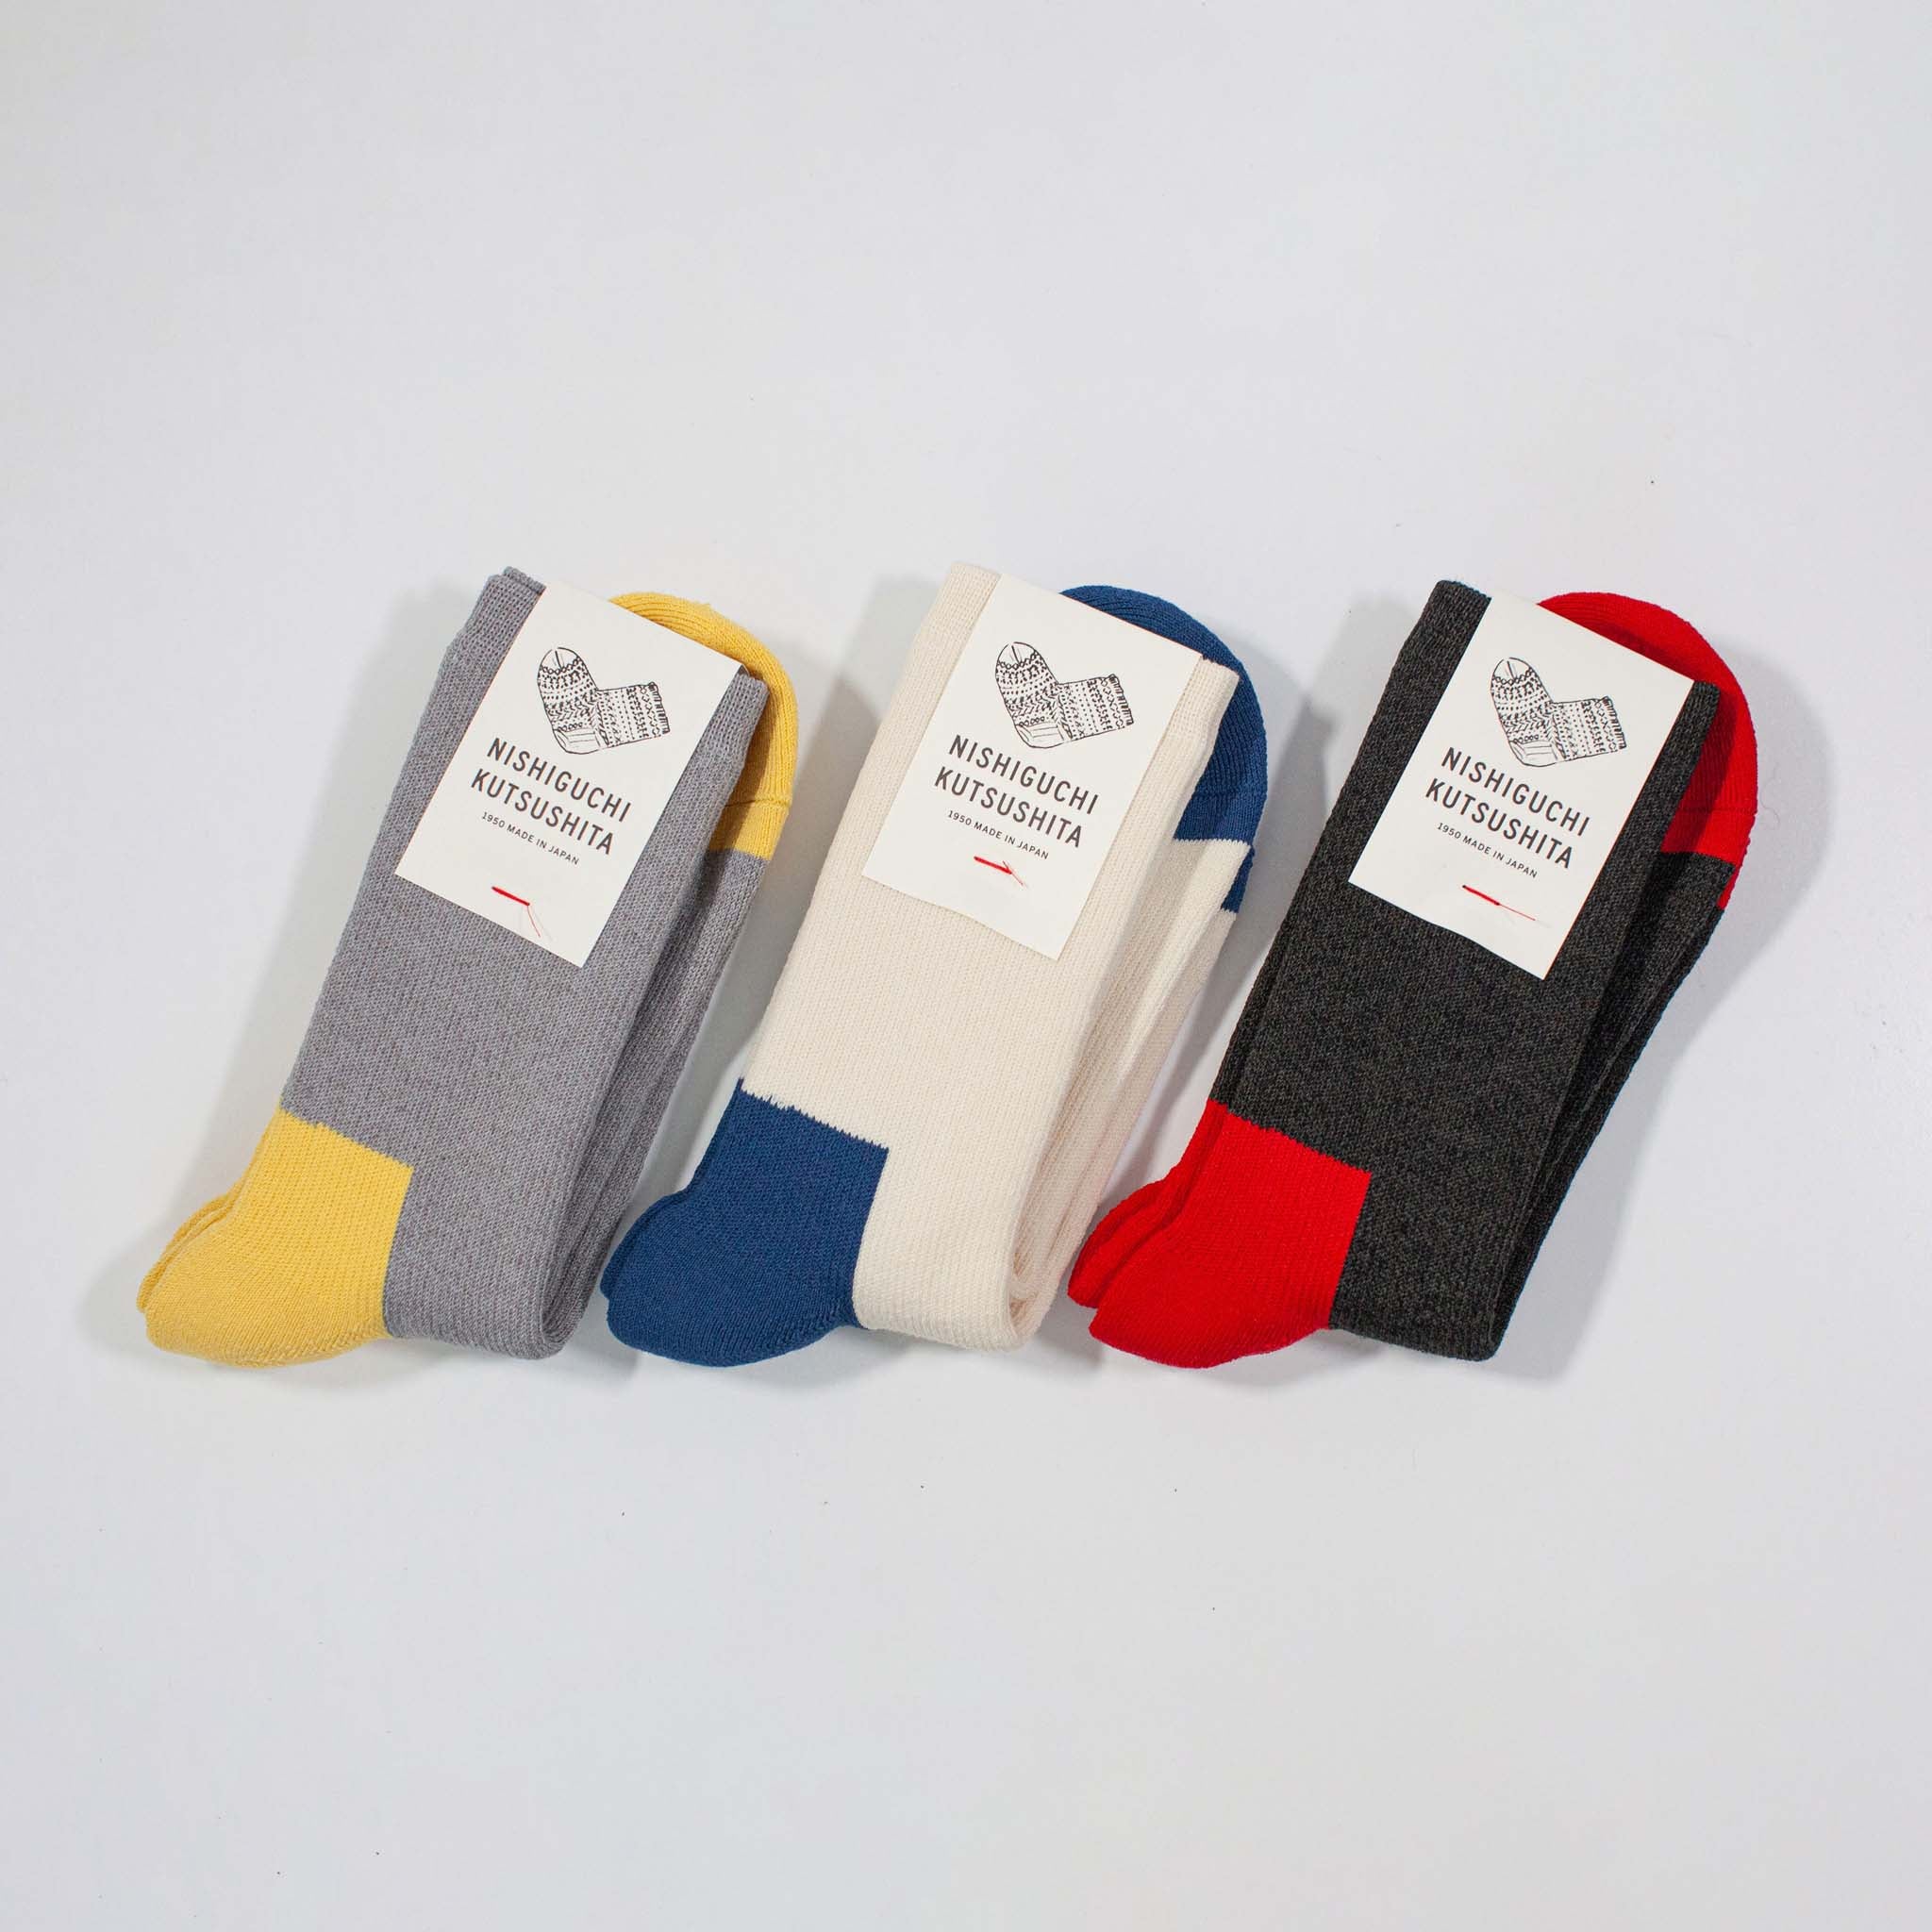 Socks that keep you feeling comfy at home｜はくひとおもいストーリー｜NISHIGUCHI  KUTSUSHITA｜NISHIGUCHI KUTSUSHITA is a Japanese sock company established in  1950.